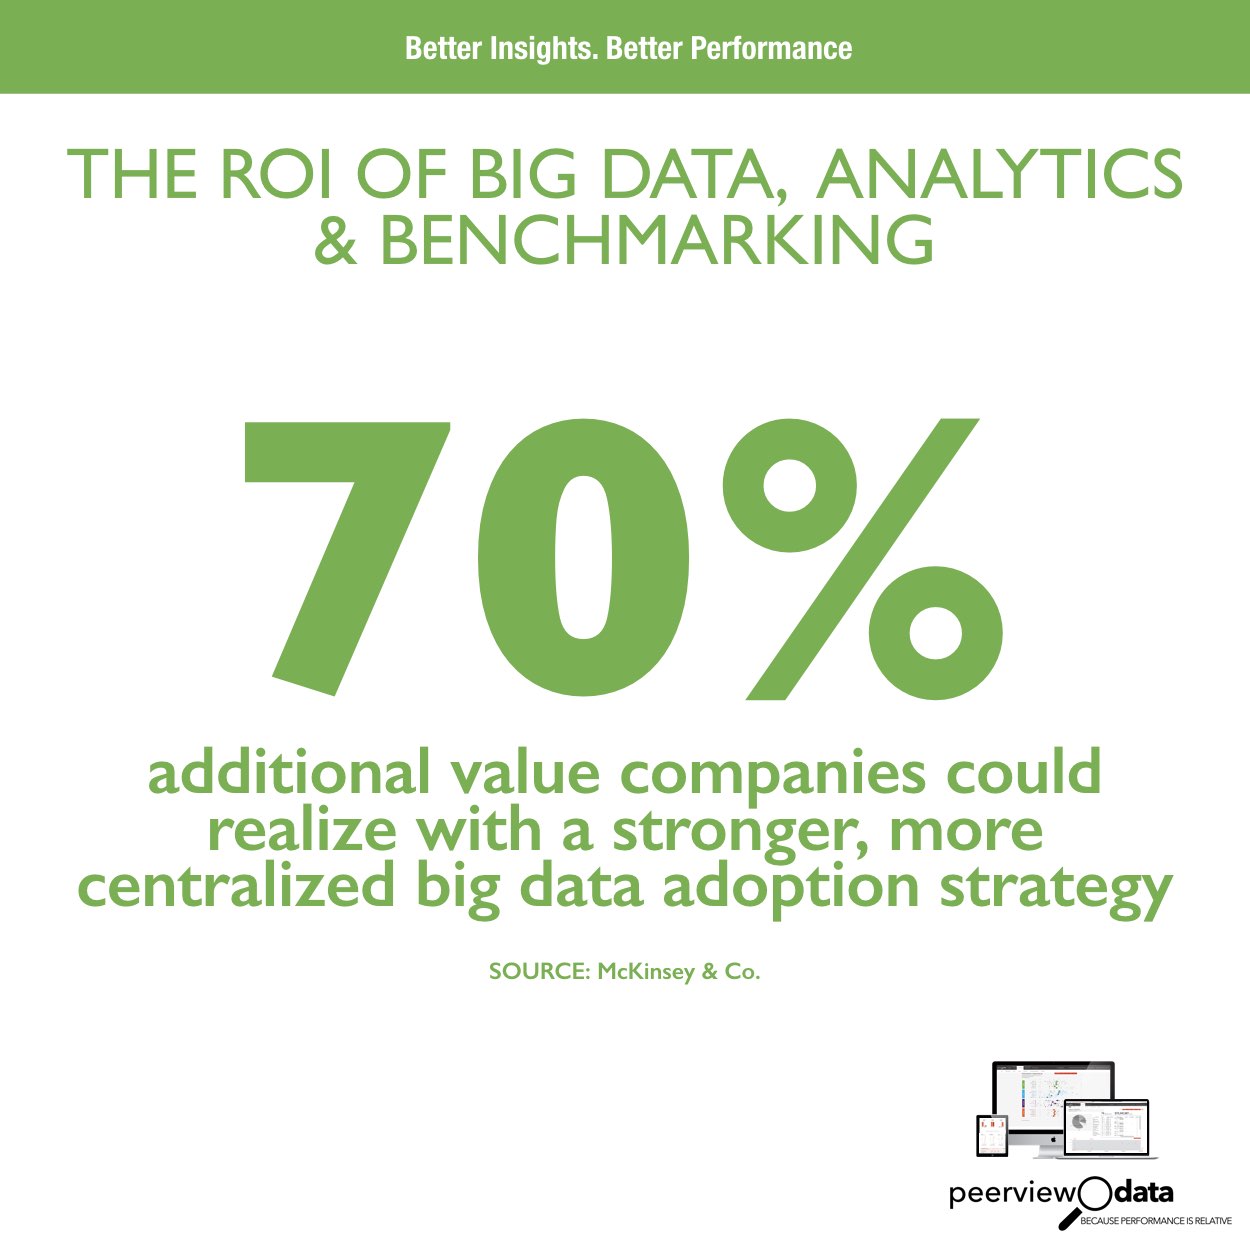 The ROI of Big Data, Analytics & Benchmarking #17